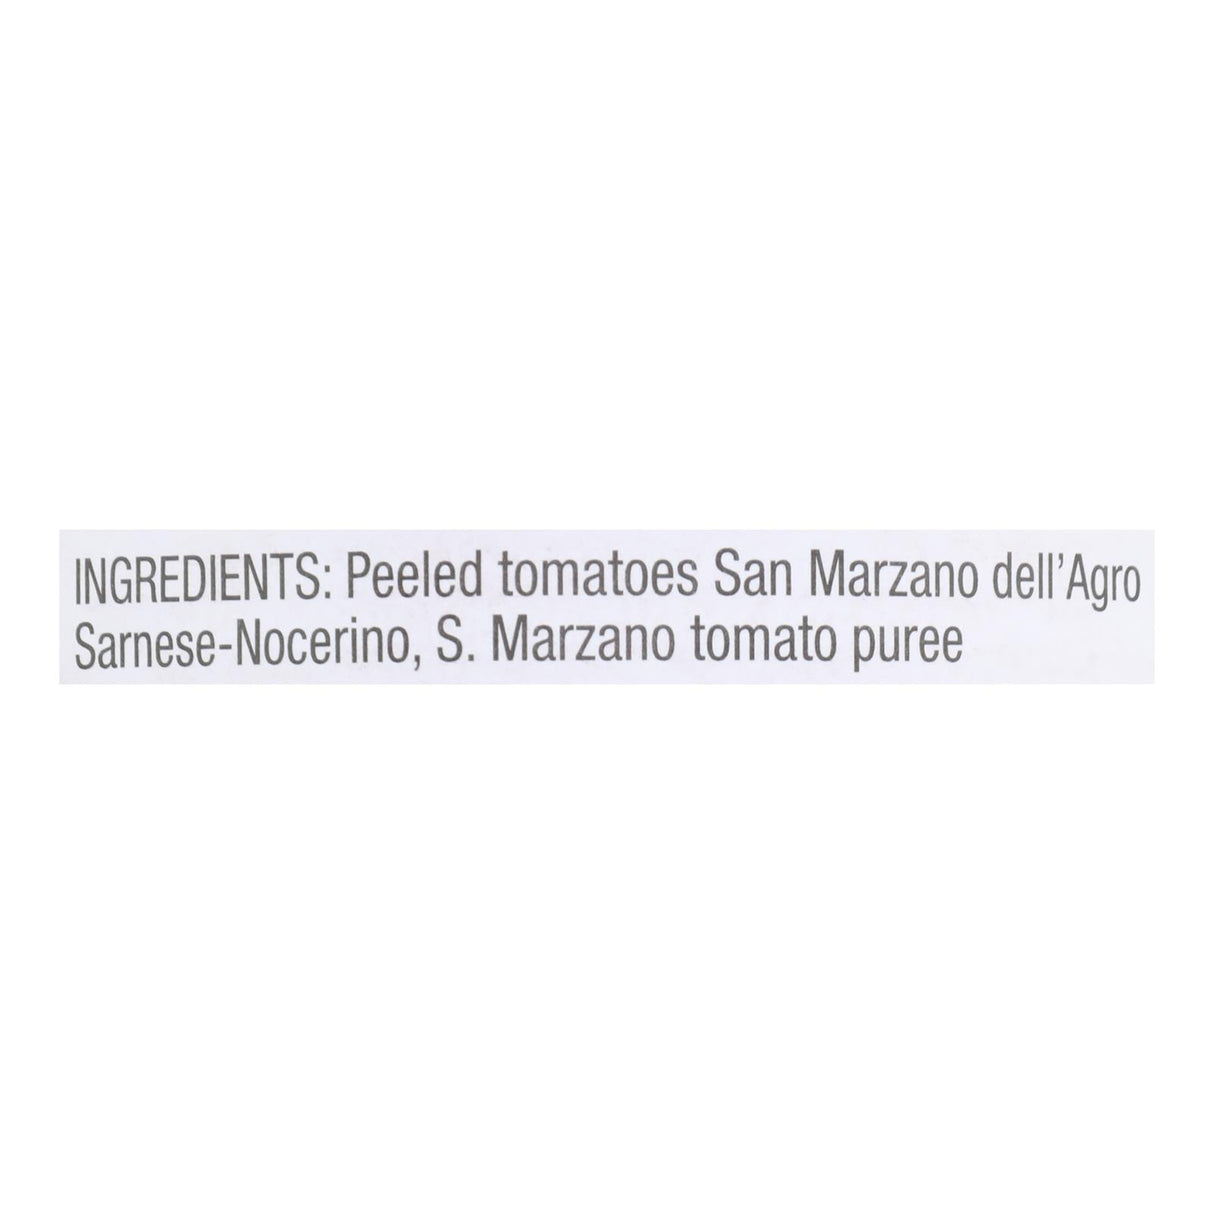 Mutti San Marzano PDO Whole Peeled Tomatoes (Pack of 6 - 14 Oz.) - Cozy Farm 